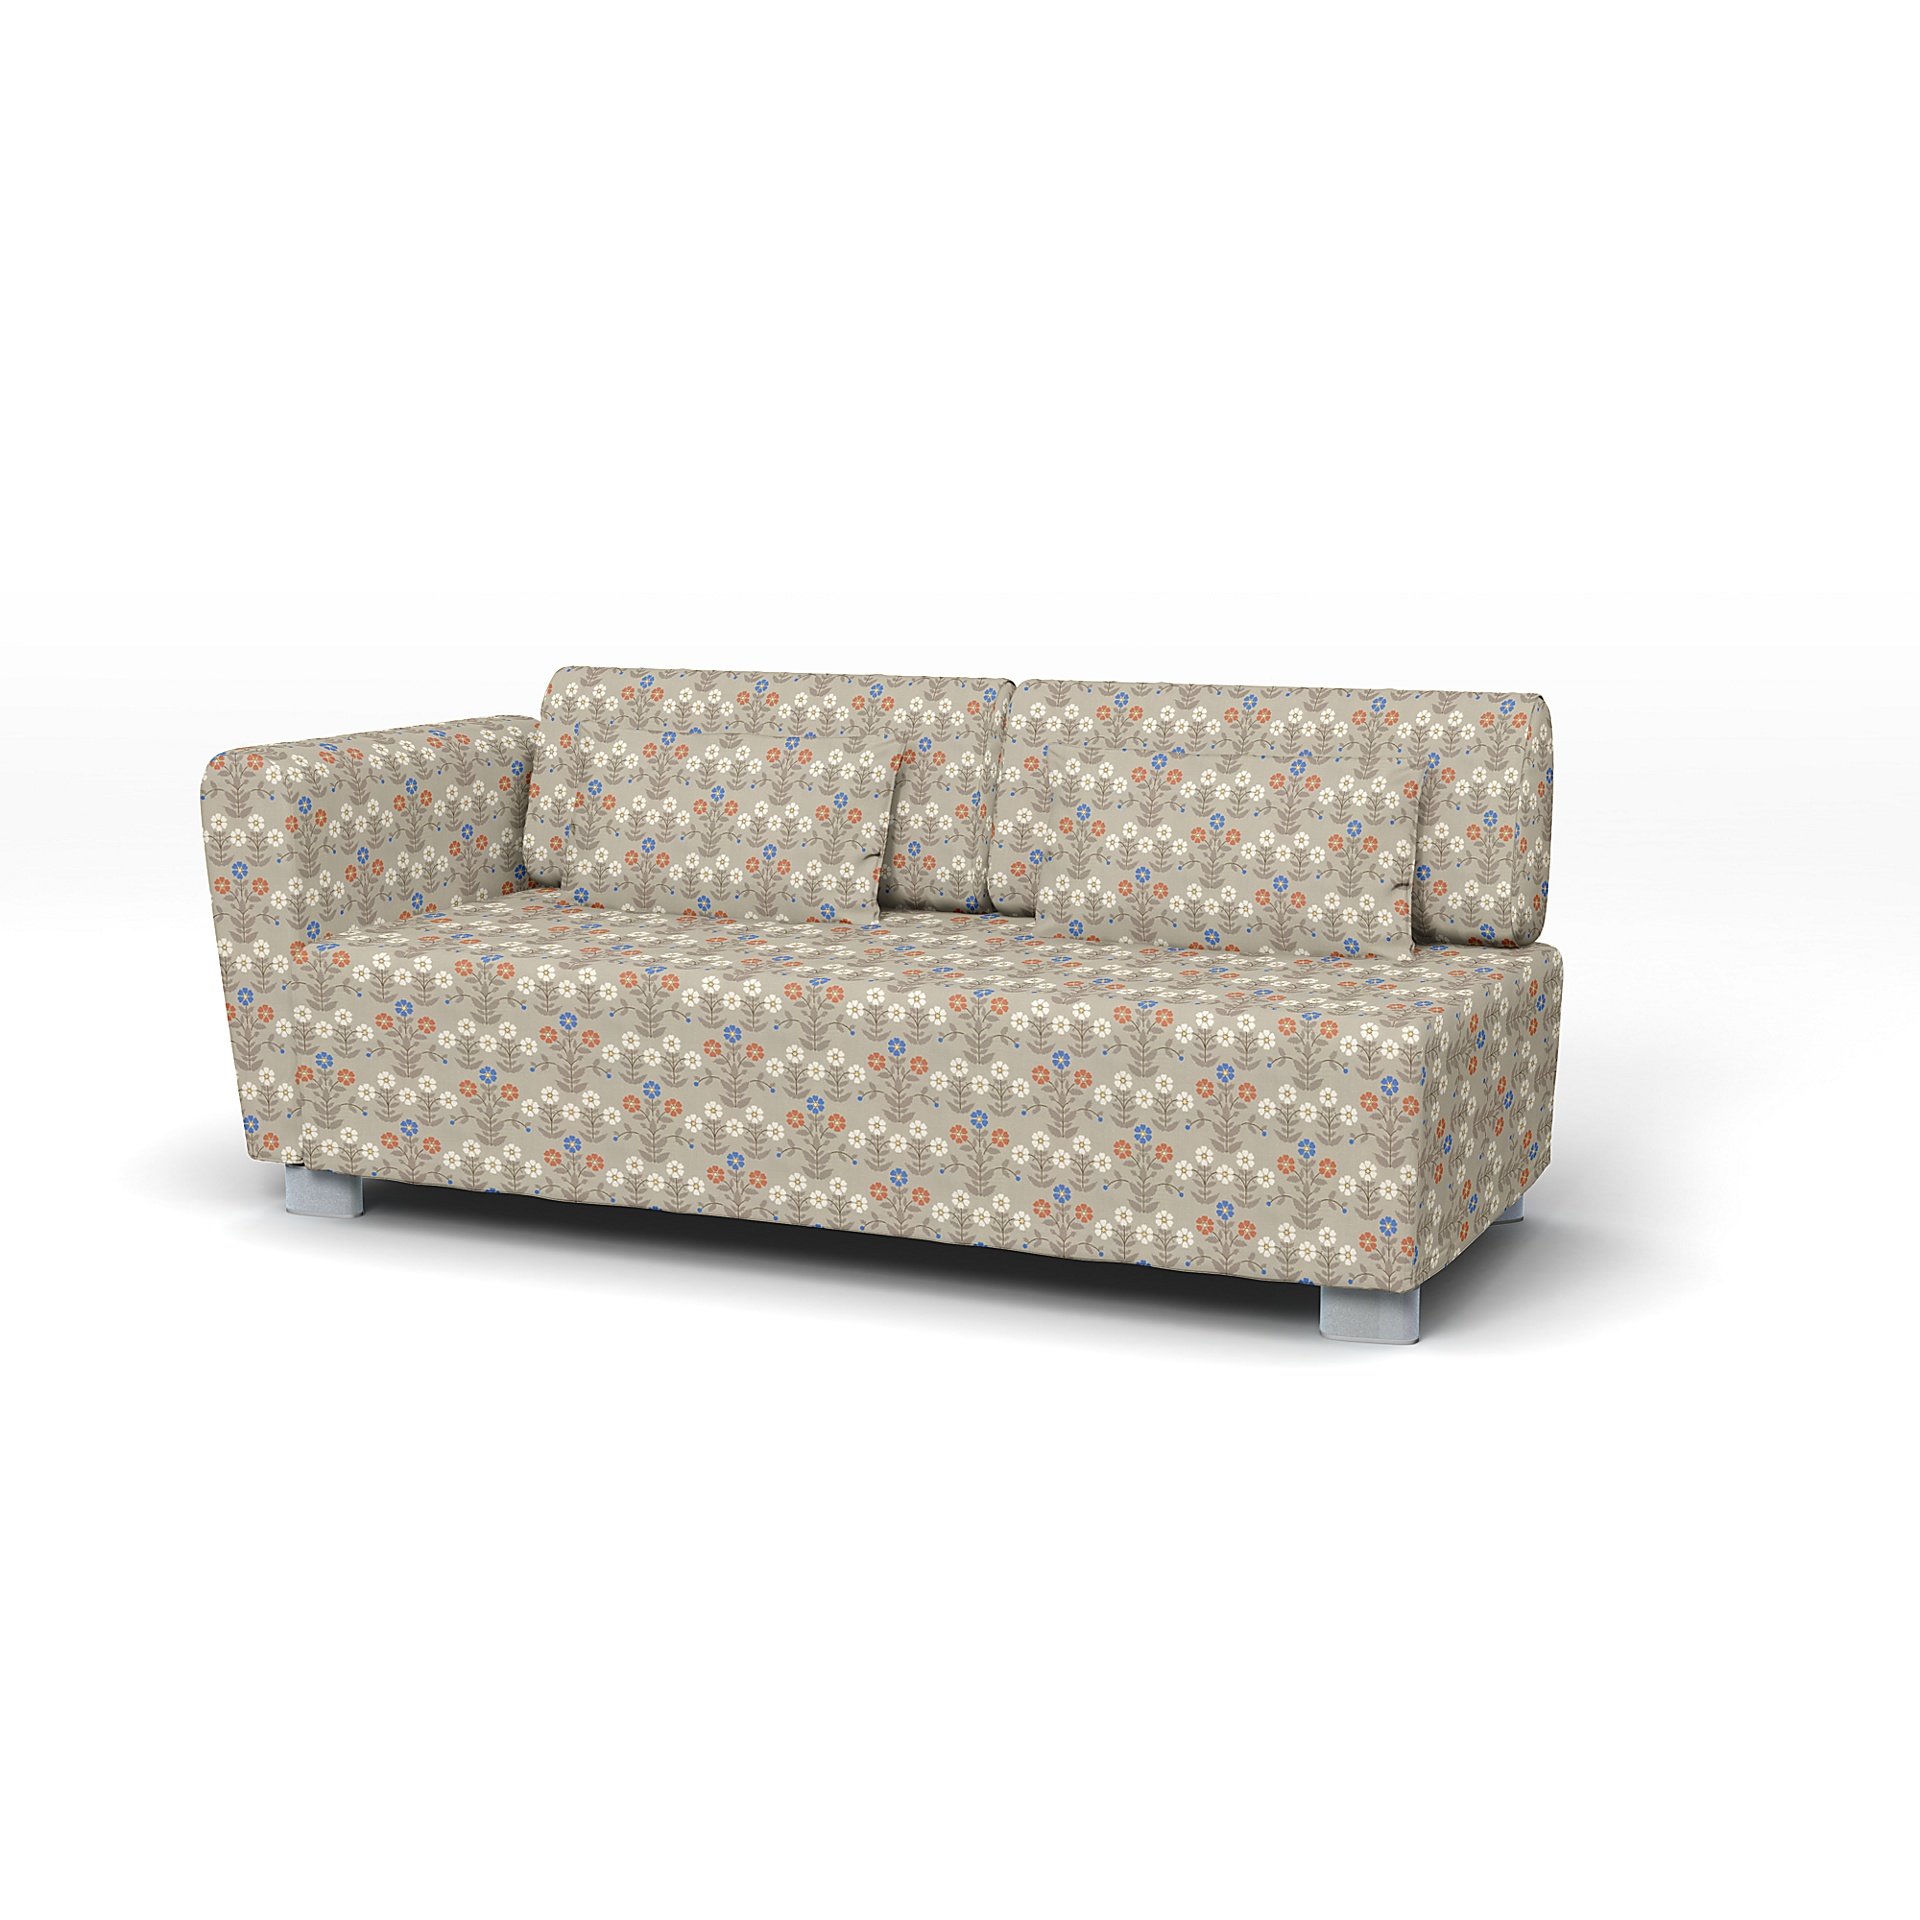 IKEA - Mysinge 2 Seater Sofa with Armrest Cover, Sippor Blue/Orange, BEMZ x BORASTAPETER COLLECTION 